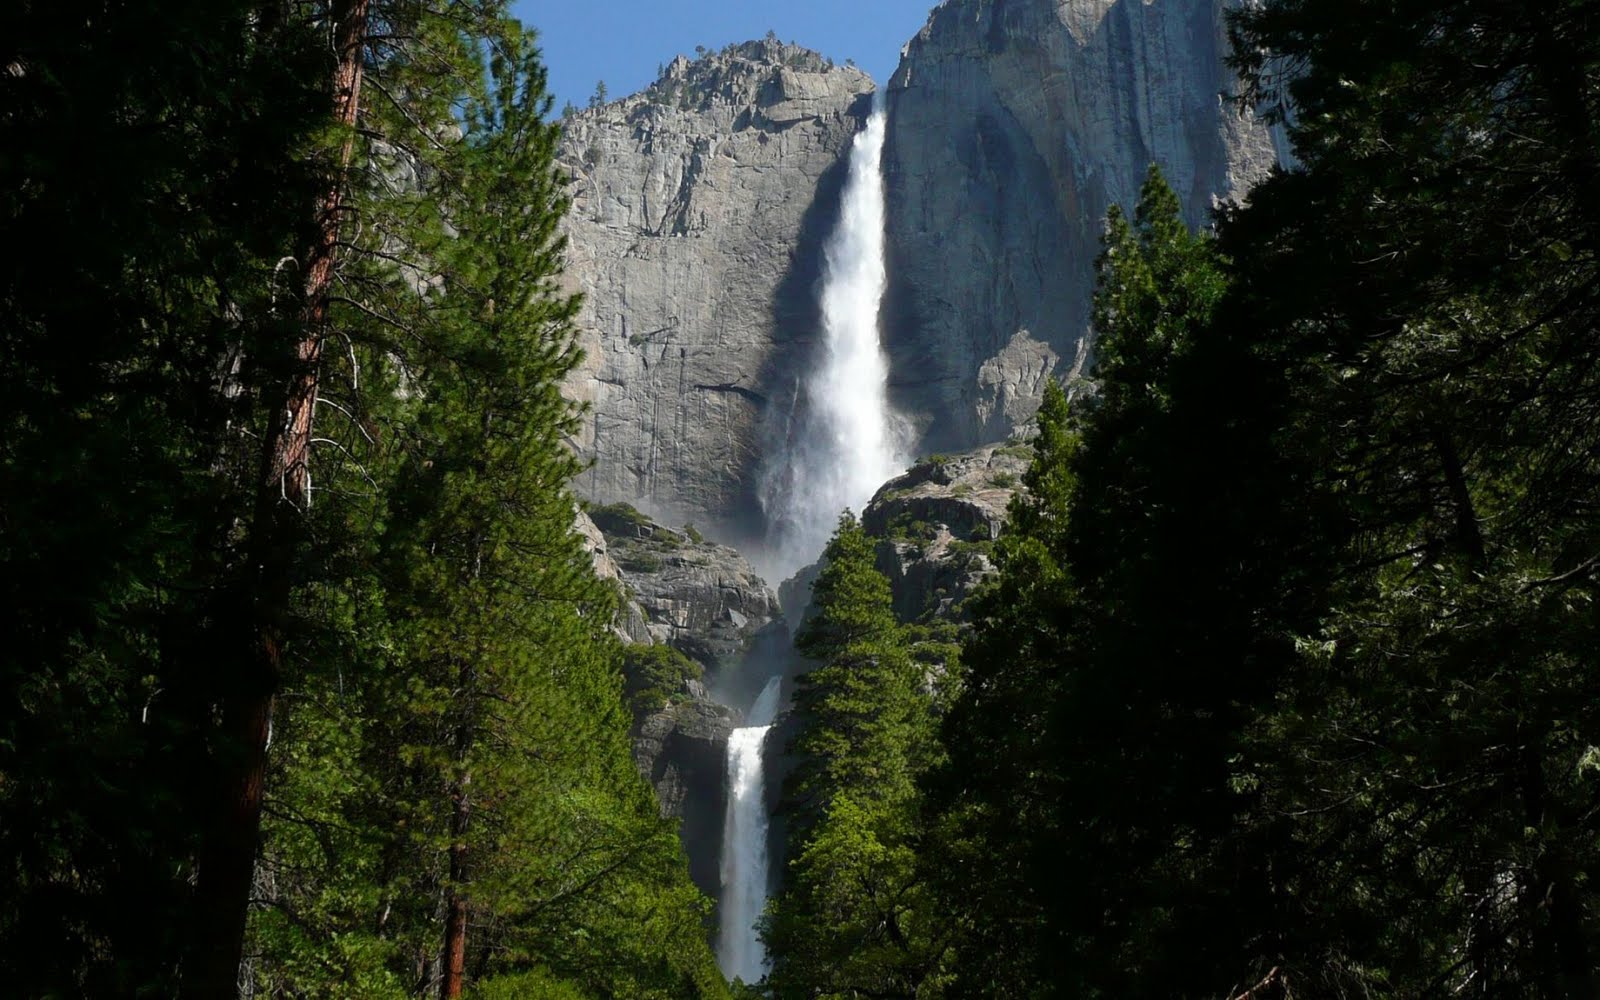 https://blogger.googleusercontent.com/img/b/R29vZ2xl/AVvXsEi07SMZi7HT020KUq3DGkqkmbyeUH6g-EEuxRcT656AjAIUabjEIkGUPMF8LeQyQgltMQL85GME81pJO8kNBCYNAeKOVYbIEvl2HBnC4Lu2miHM7iAGf0sBlhJKKYGhdImZ01VpAz-pT5c/s1600/Yosemite_Falls_1680+x+1050+widescreen.jpg